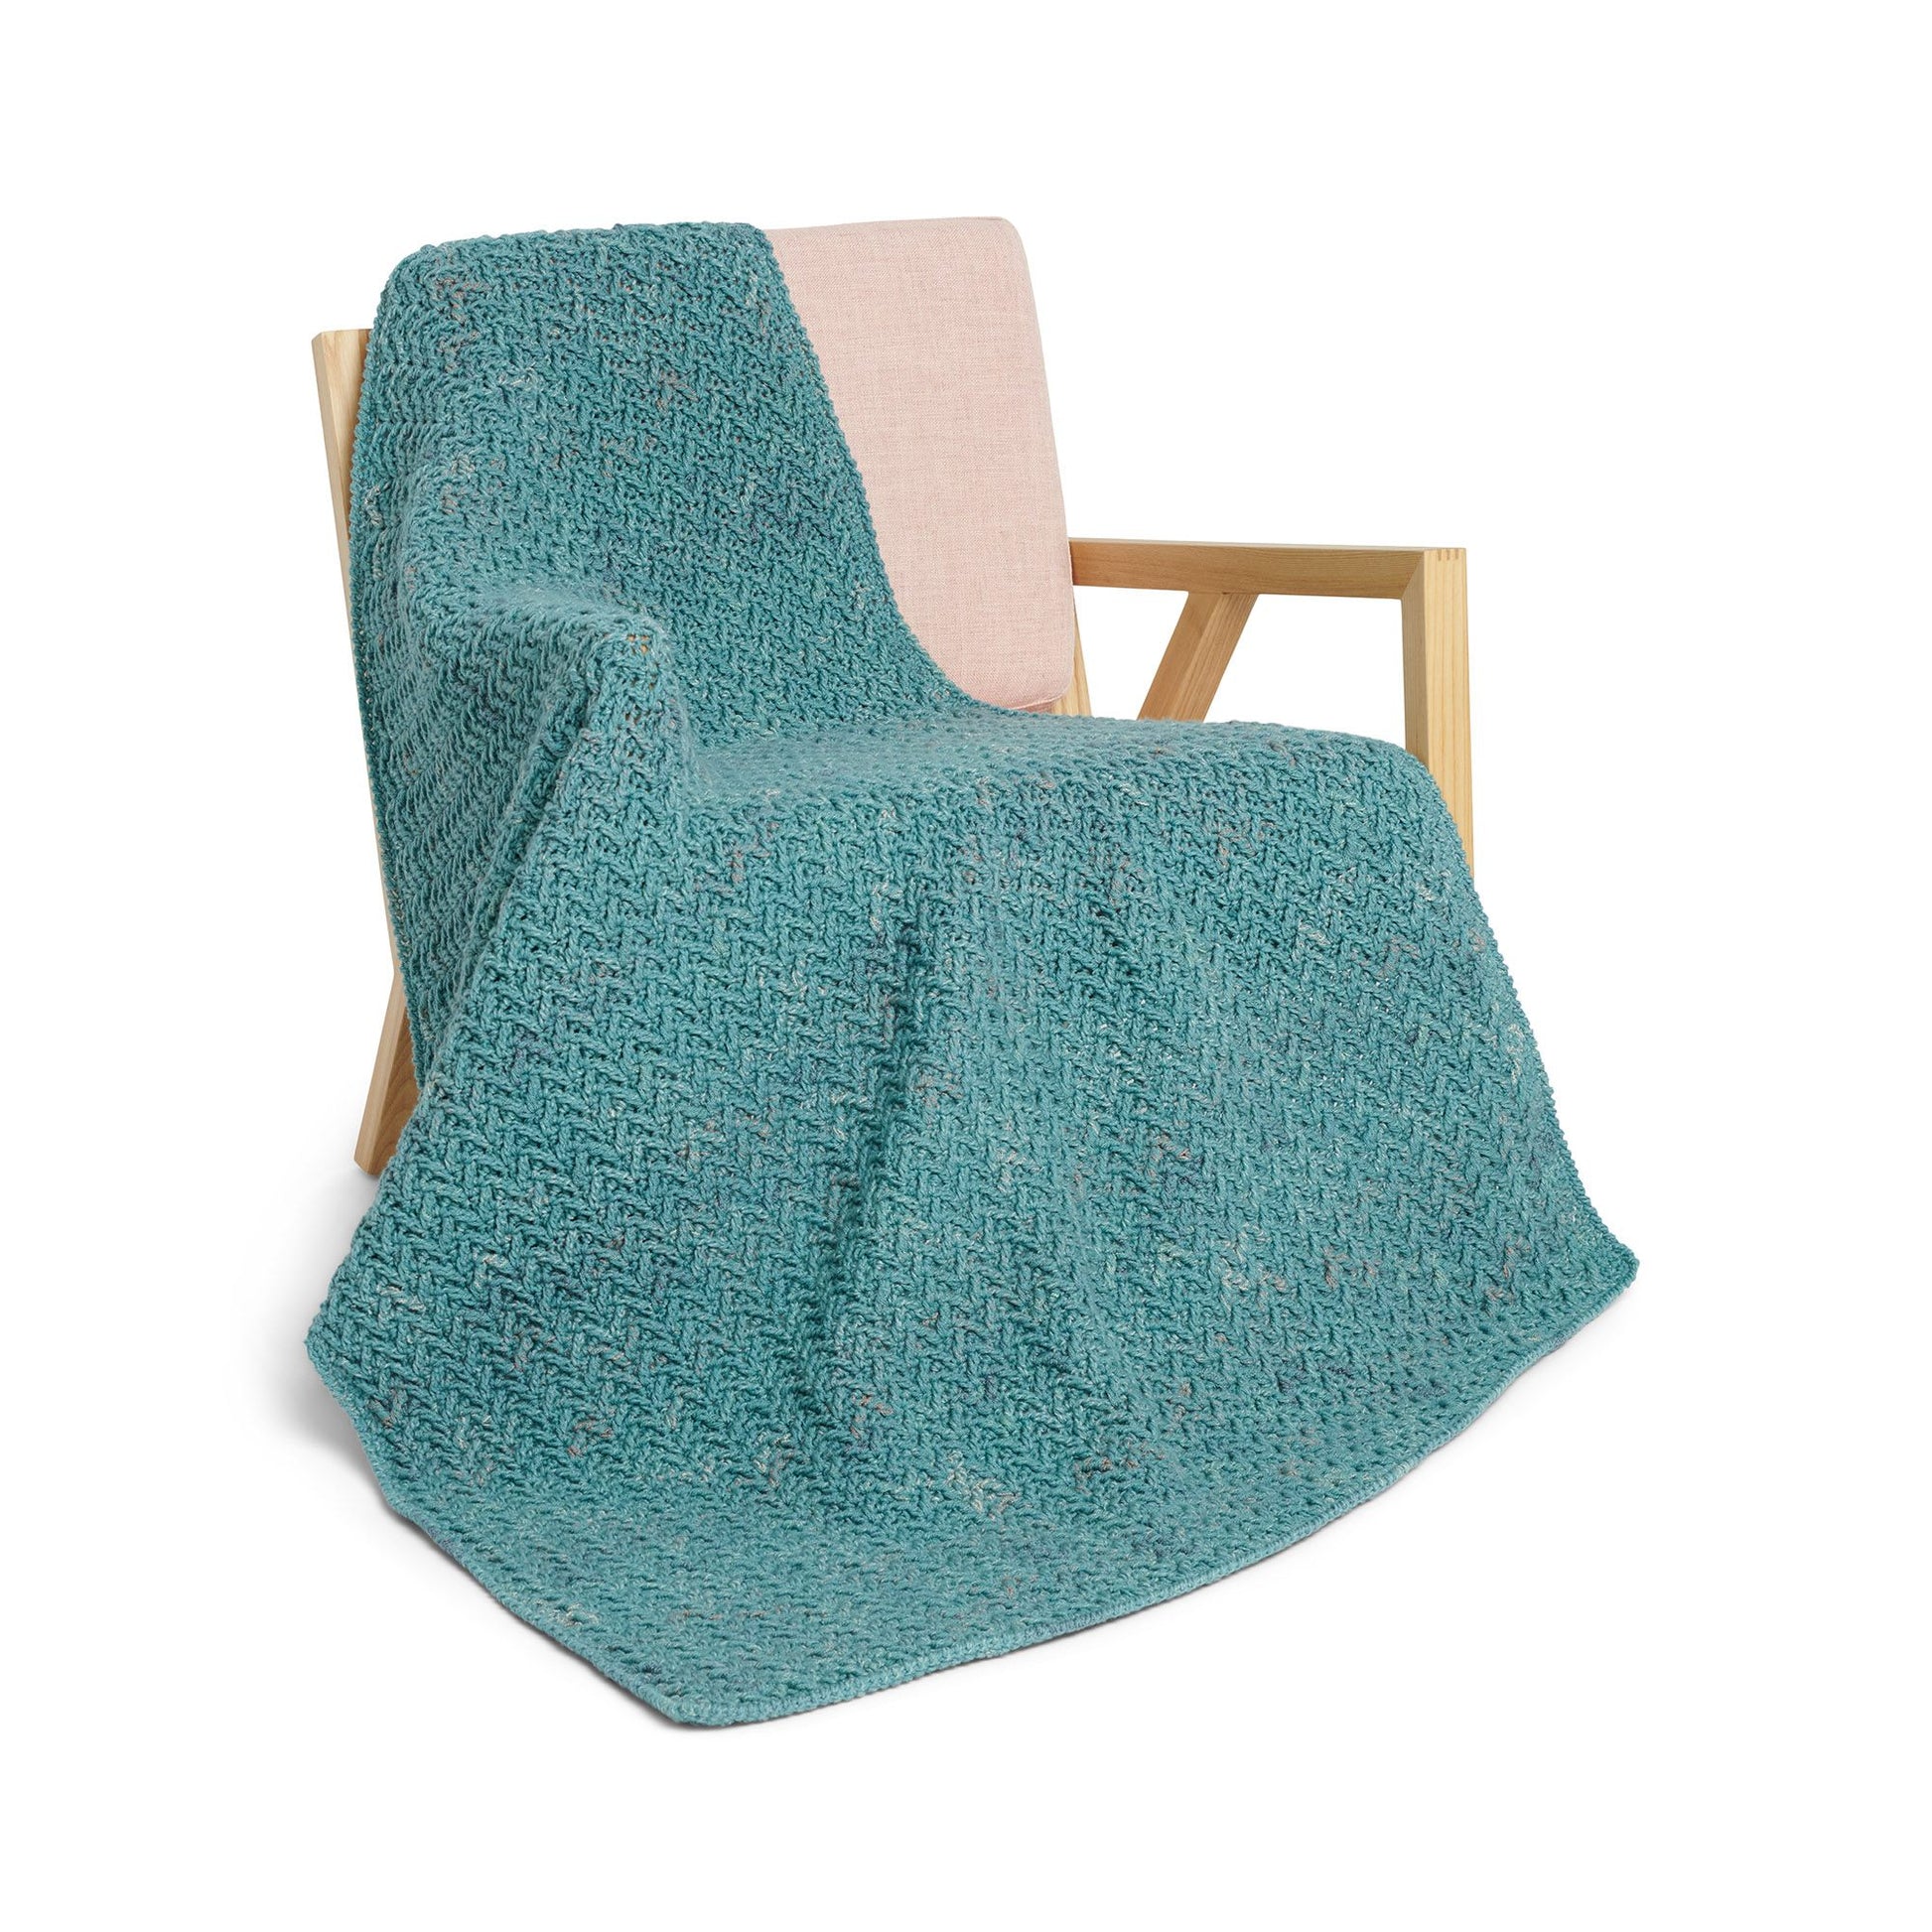 Free Caron Herringbone Texture Crochet Blanket Pattern